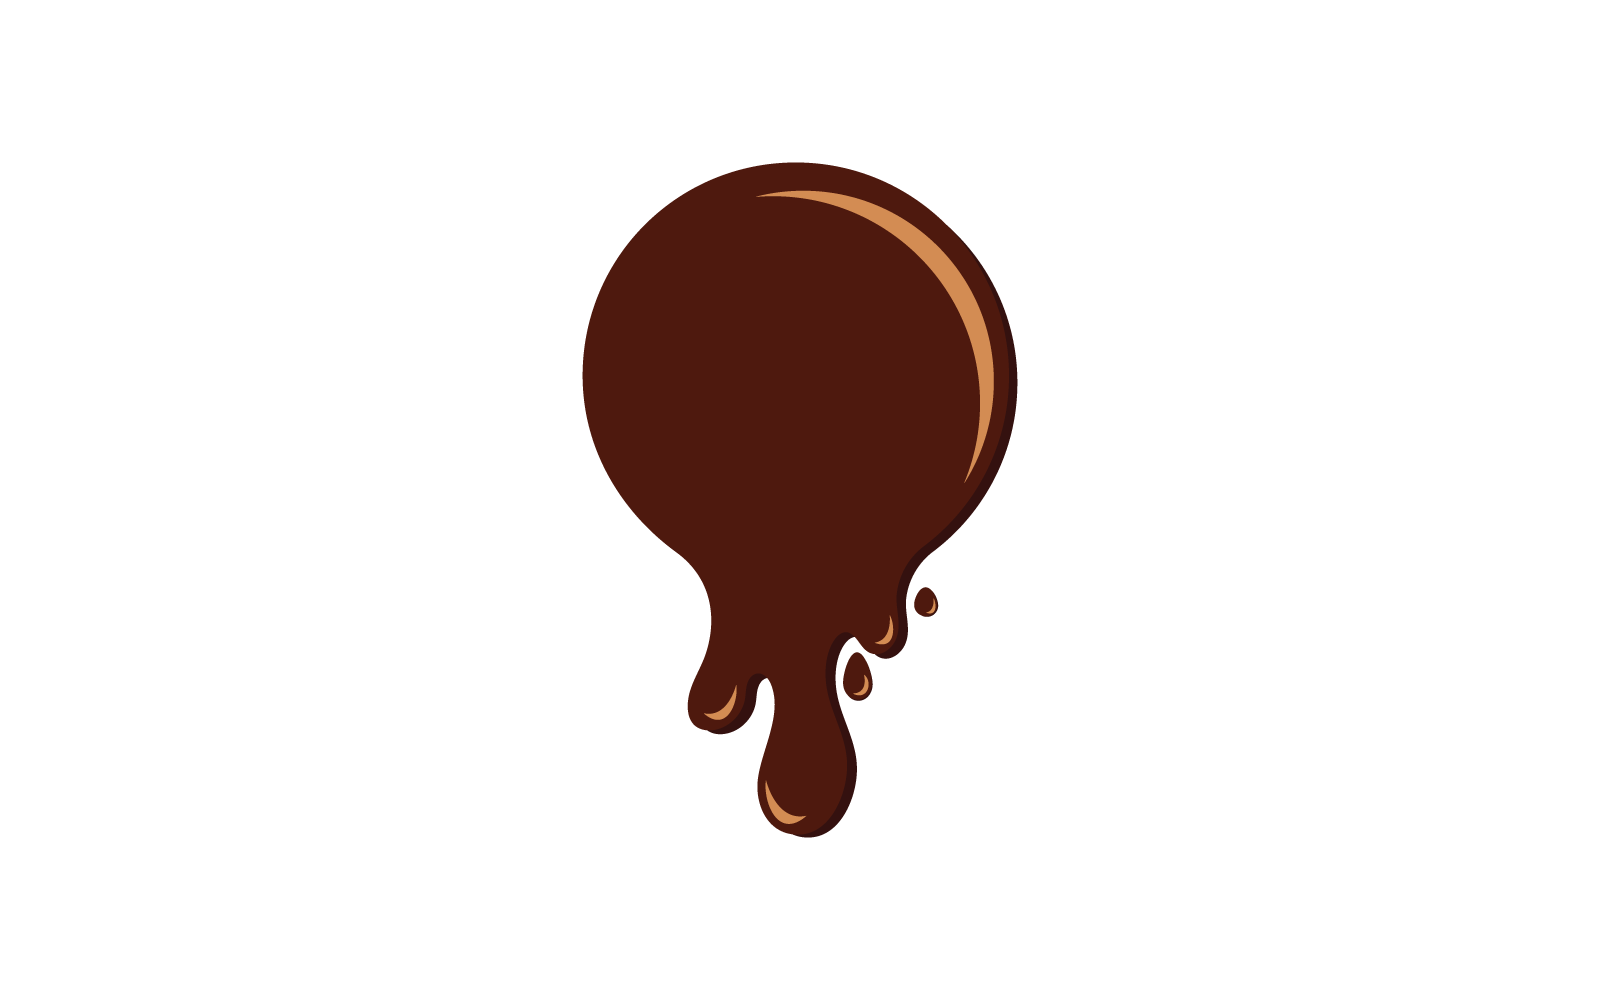 Chocolate illustration vector flat design template